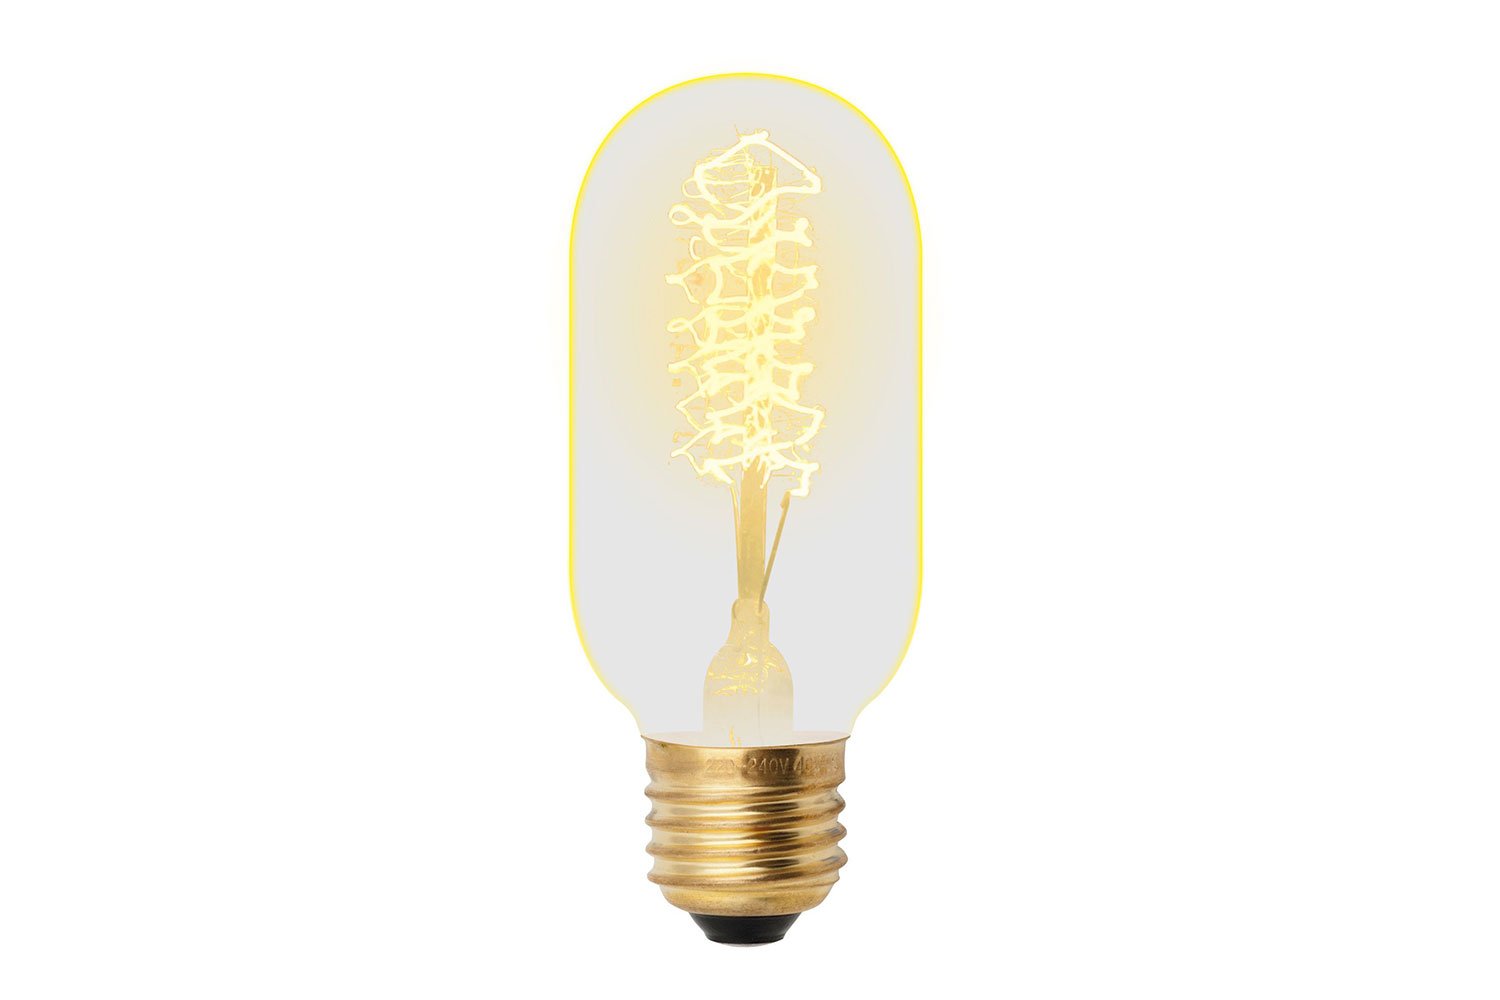 Лампа накаливания (UL-00000486) E27 40W колба золотистая IL-V-L45A-40/GOLDEN/E27 CW01